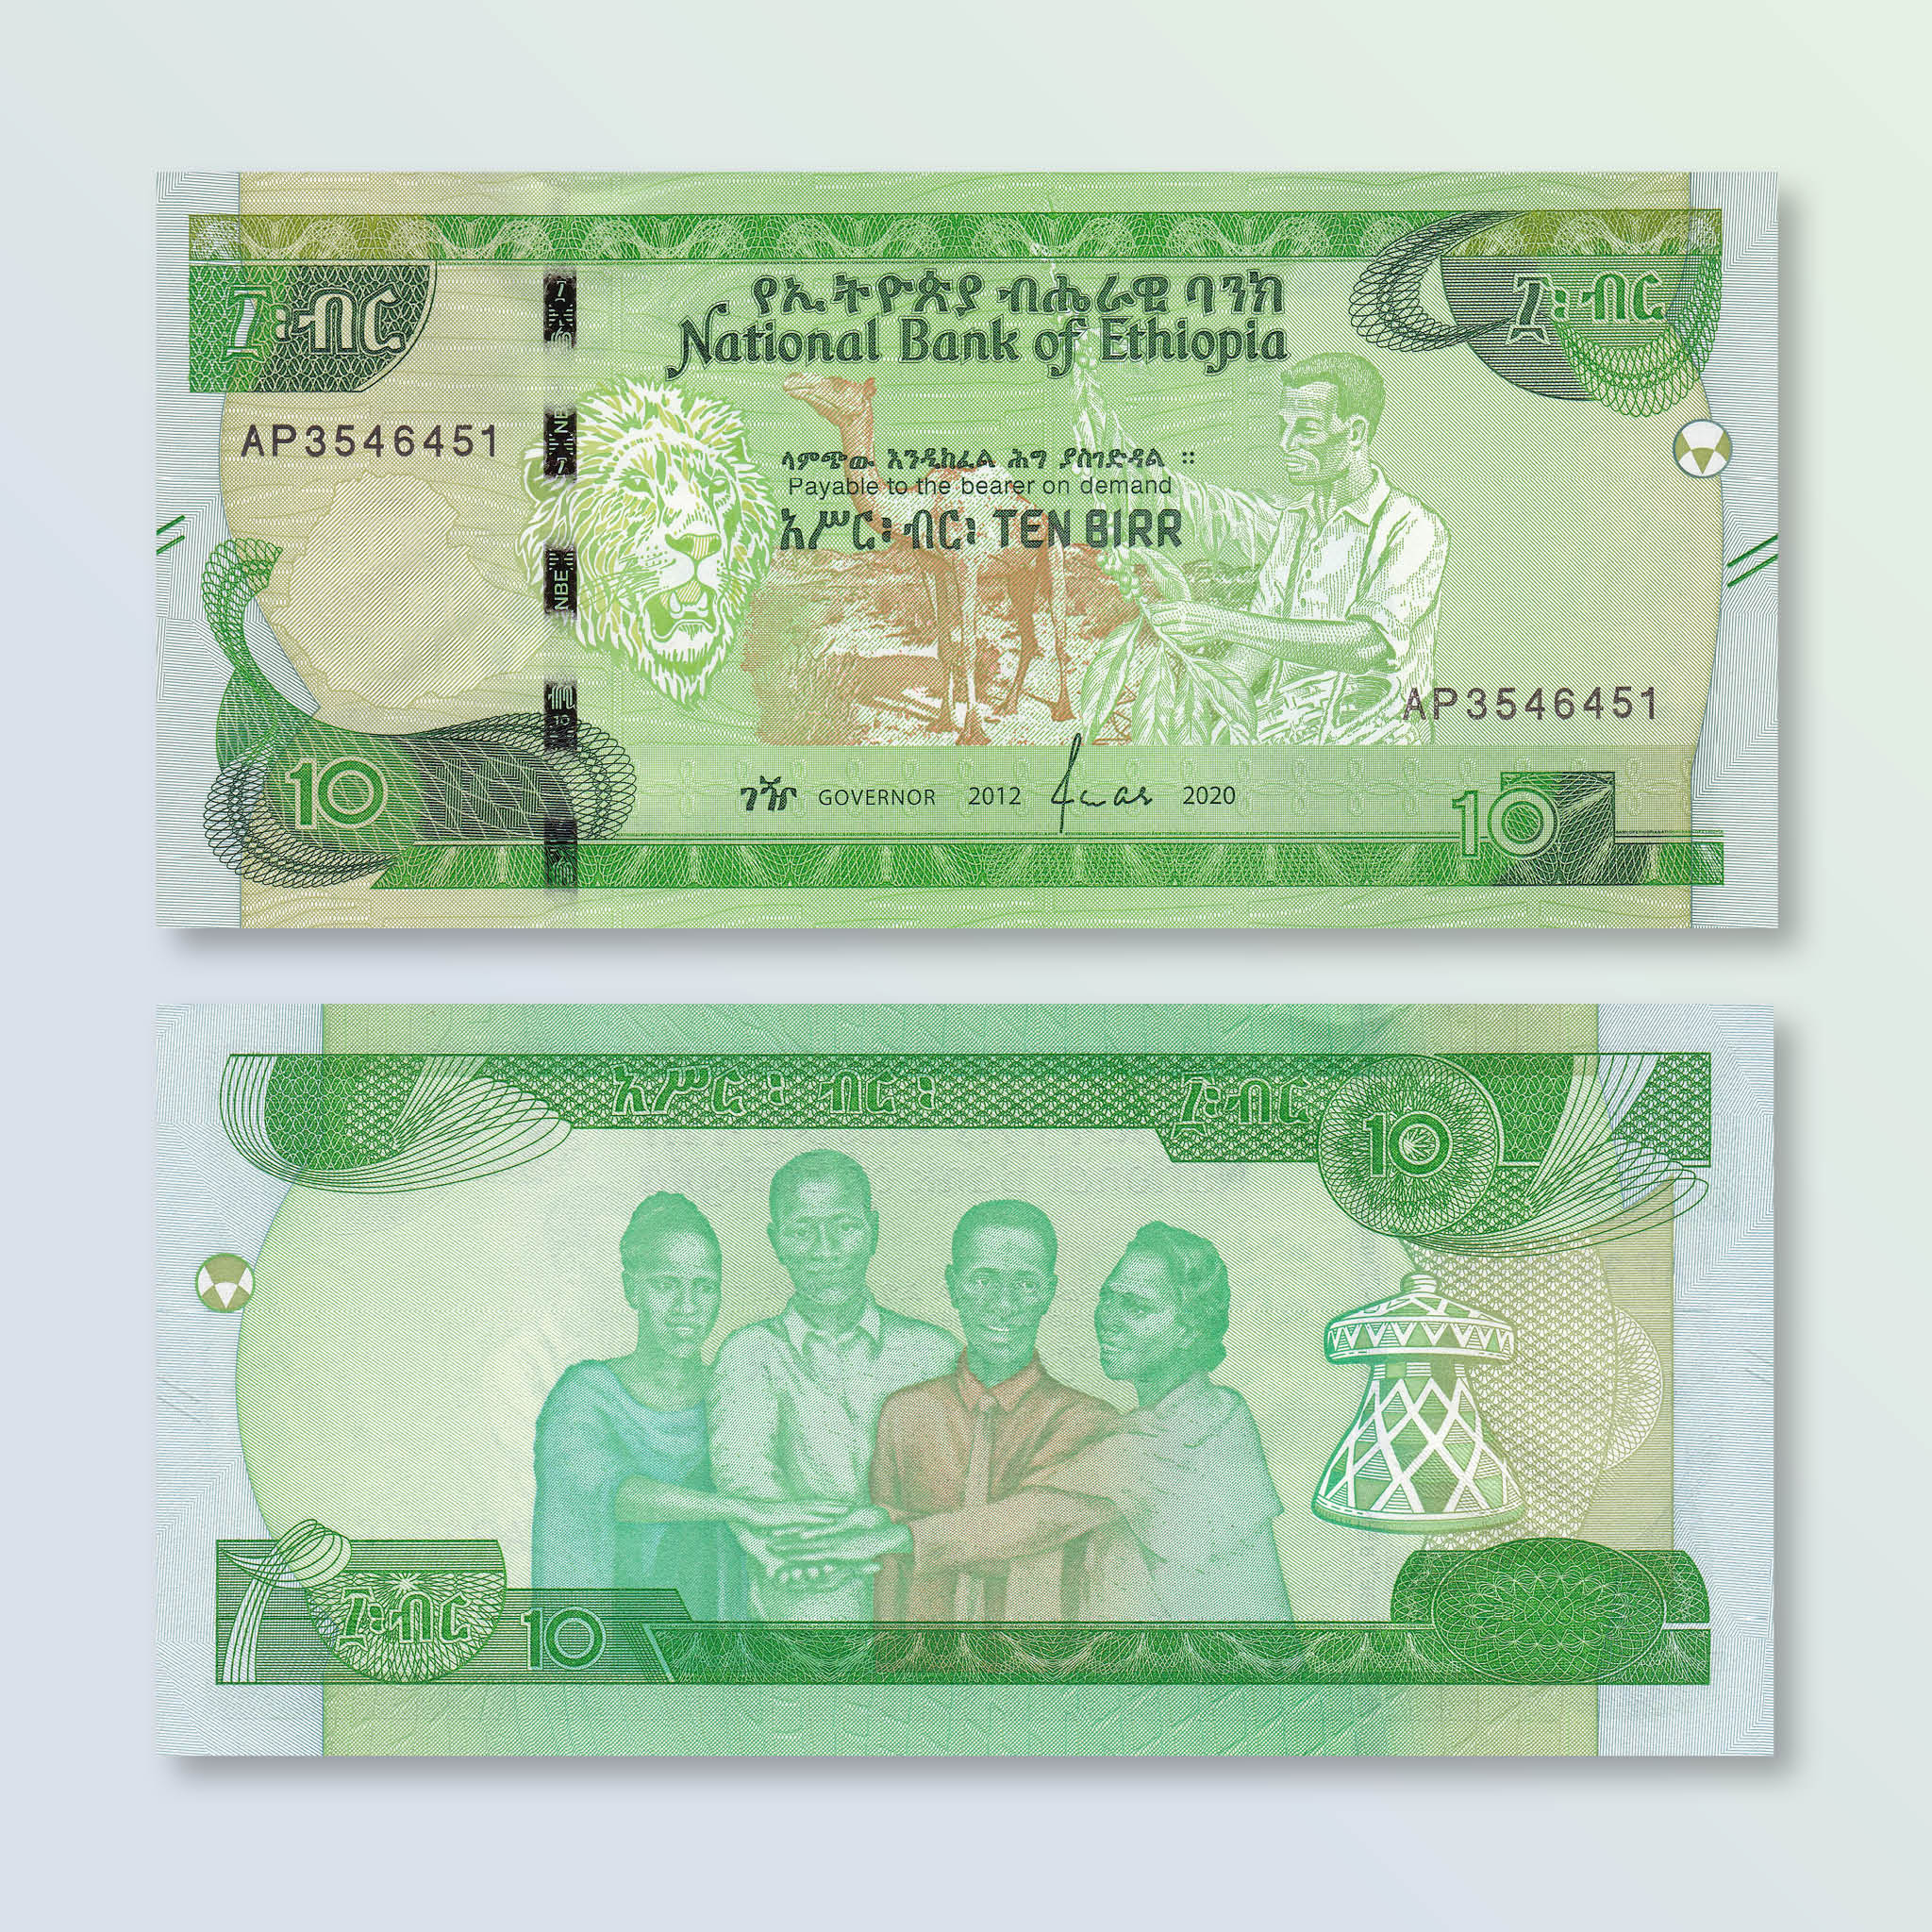 Ethiopia 10 Birr, 2012/2020, B335a, UNC - Robert's World Money - World Banknotes